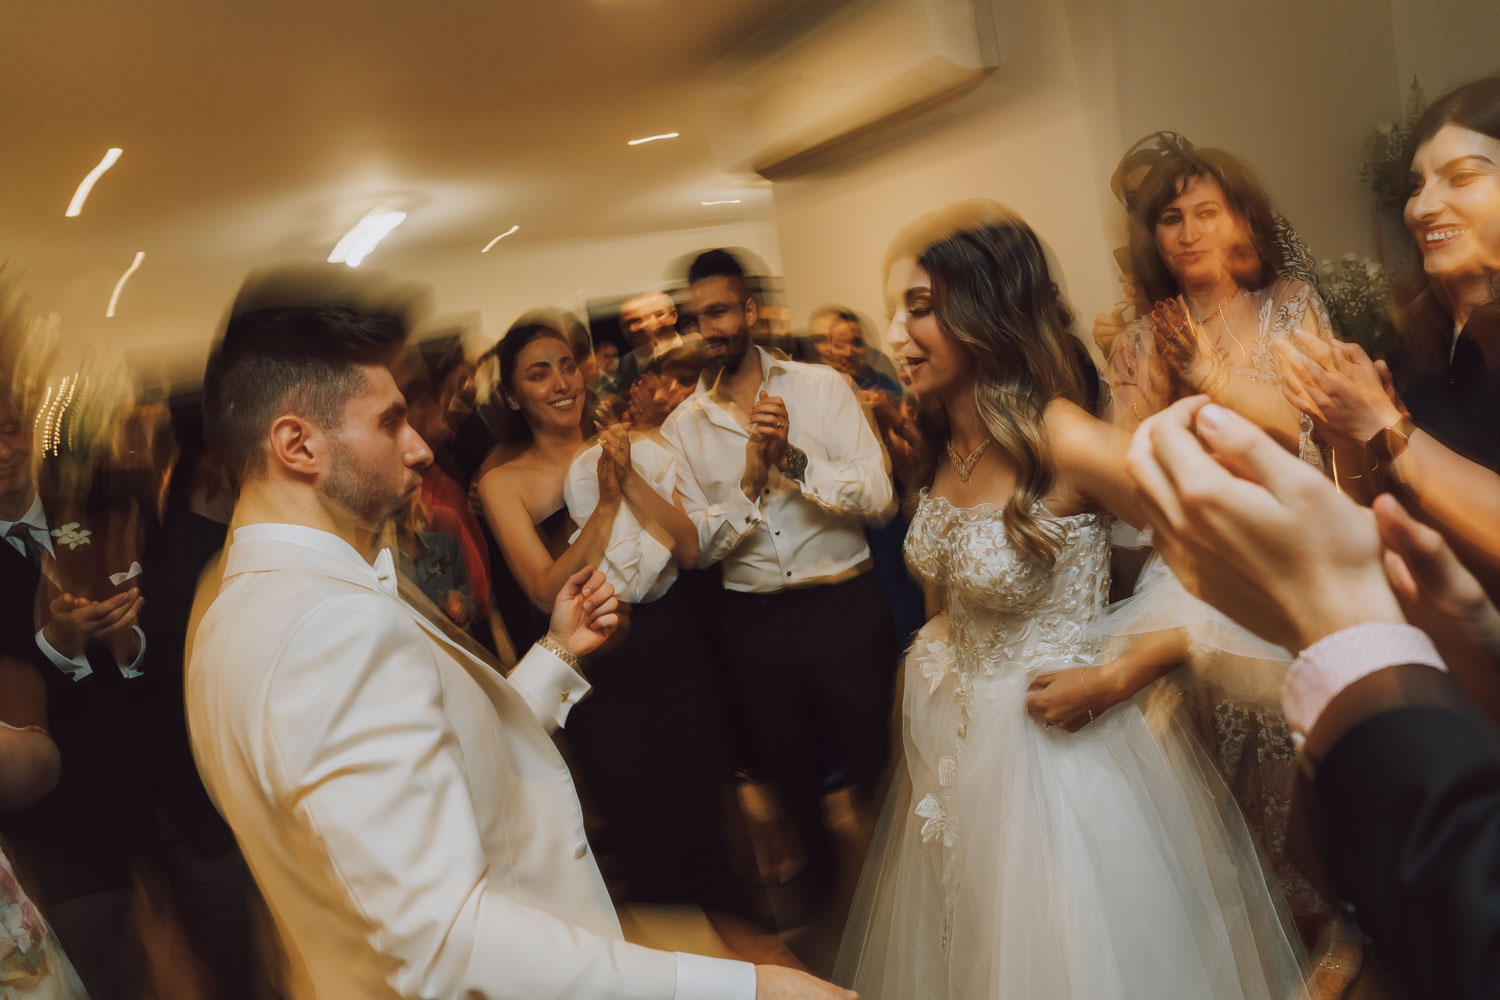 Melbourne wedding videographer captures newlyweds dancing on the dance floor.